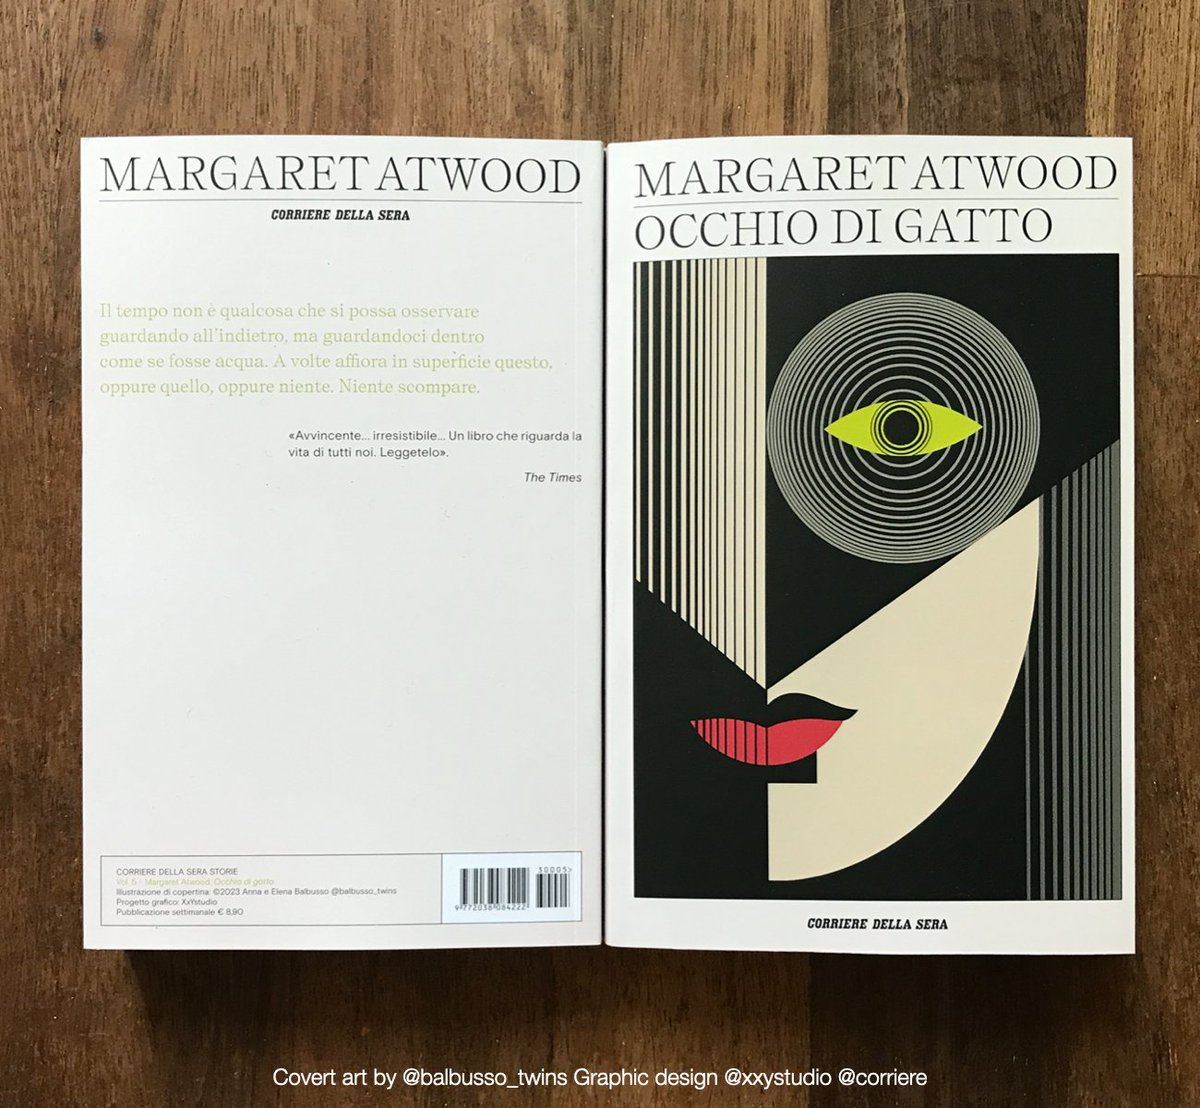 #artworks #annaelenabalbusso 
#5 BOOK Cat's Eye Margaret Atwood's series @Corriere 
#coverart @balbusso_twins
#graphicdesign @xxystudio  #MargaretAtwood #occhiodigatto #illustrazioni #copertine #cover #art #illustration #illustrationartist #digitalart #bookslovers #bookcollectors